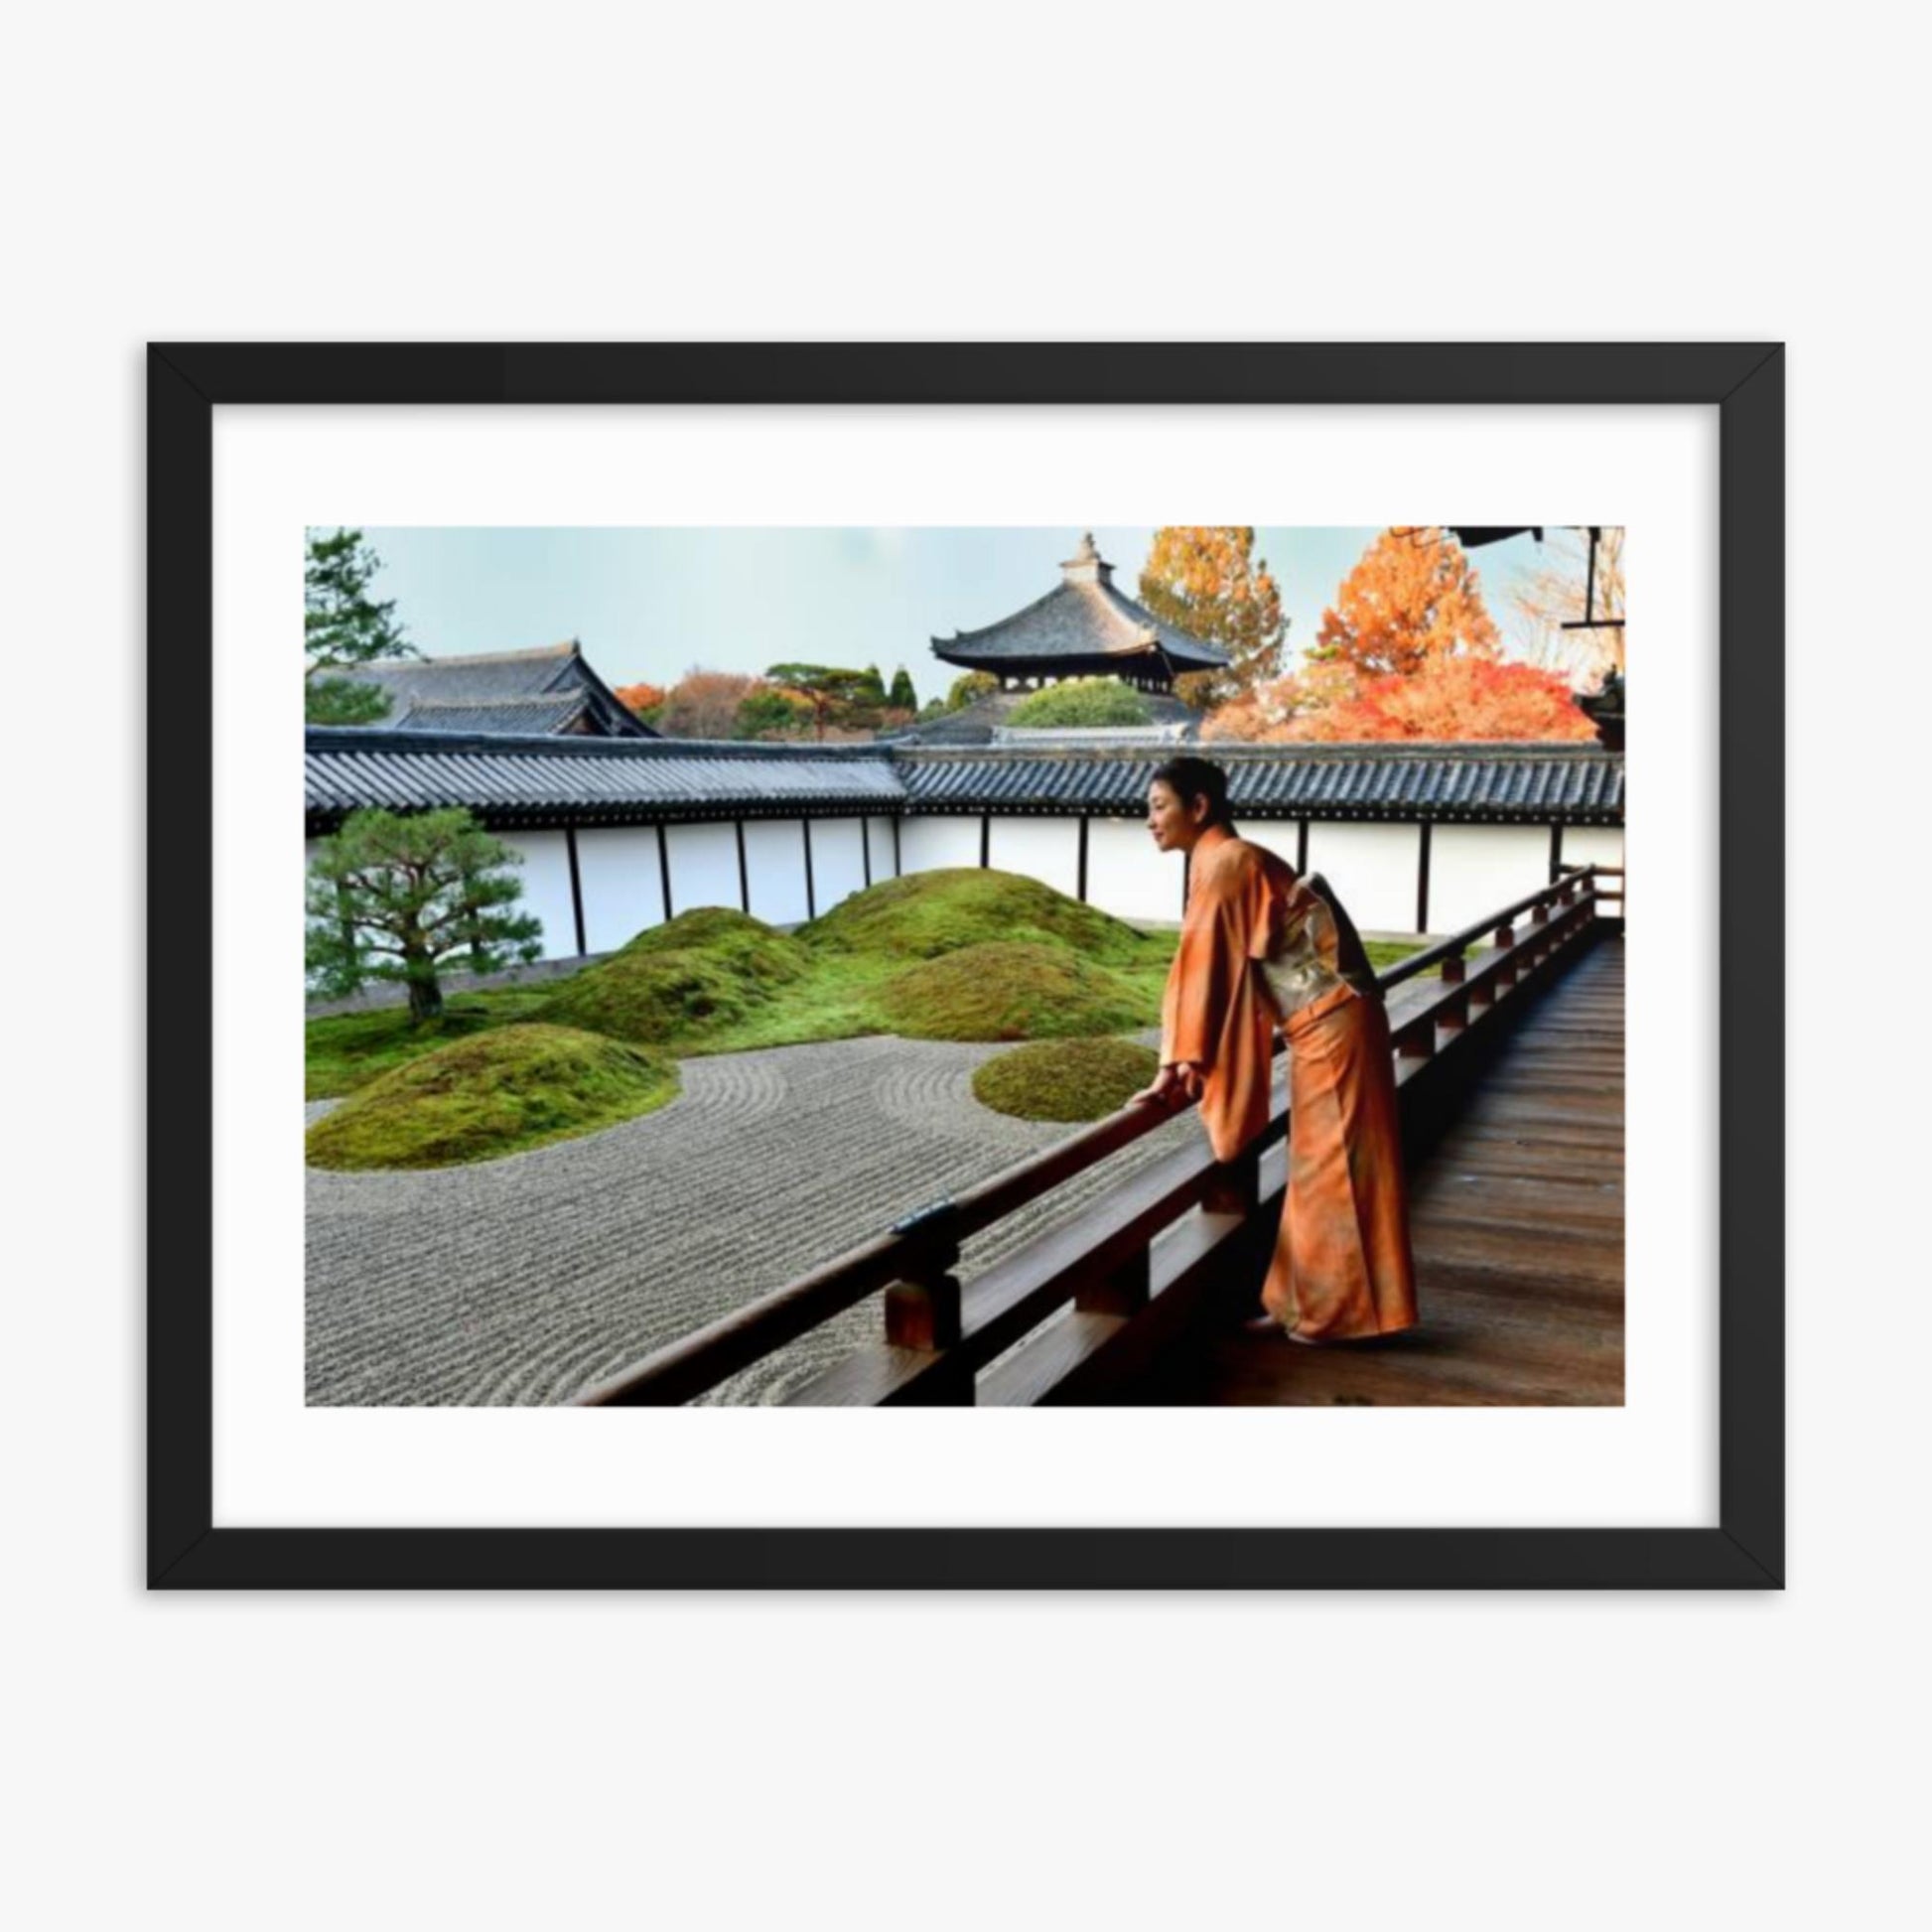 Japanese Woman in Kimono Appreciating Japanese Garden at Tofukuji, Kyoto 18x24 in Poster With Black Frame